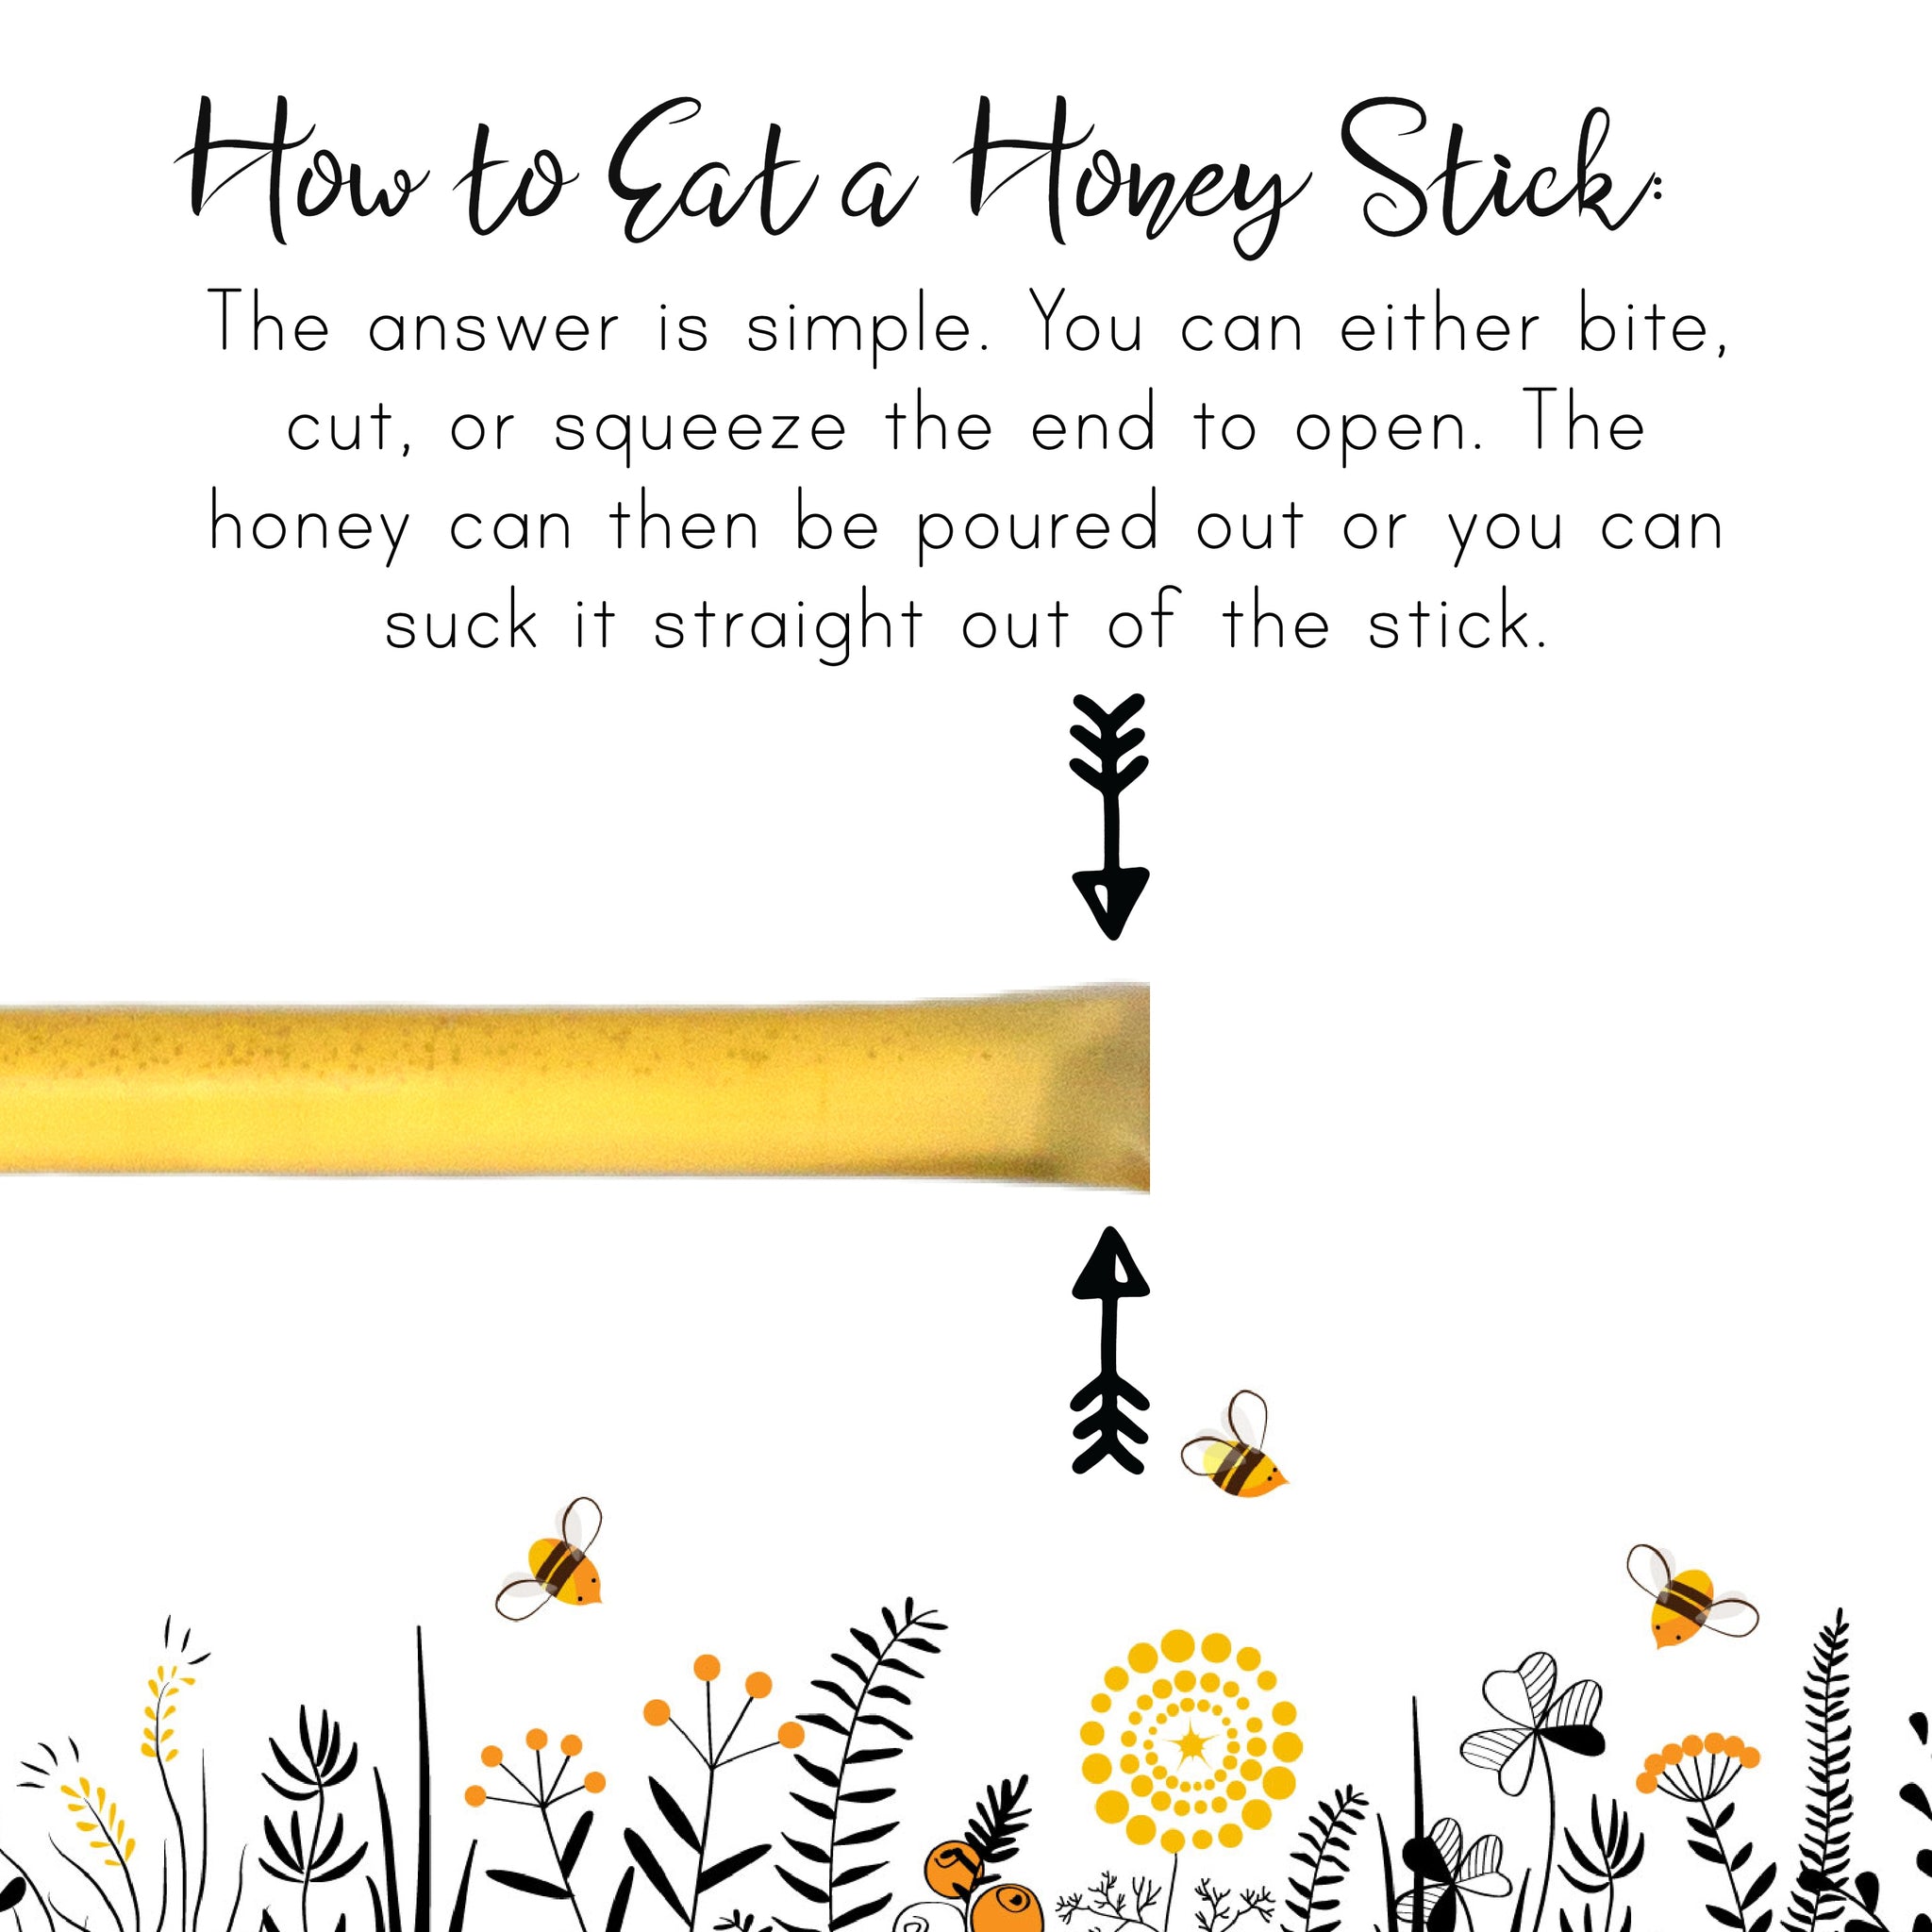 Pure Northern Michigan Honey Sticks 10 pk.